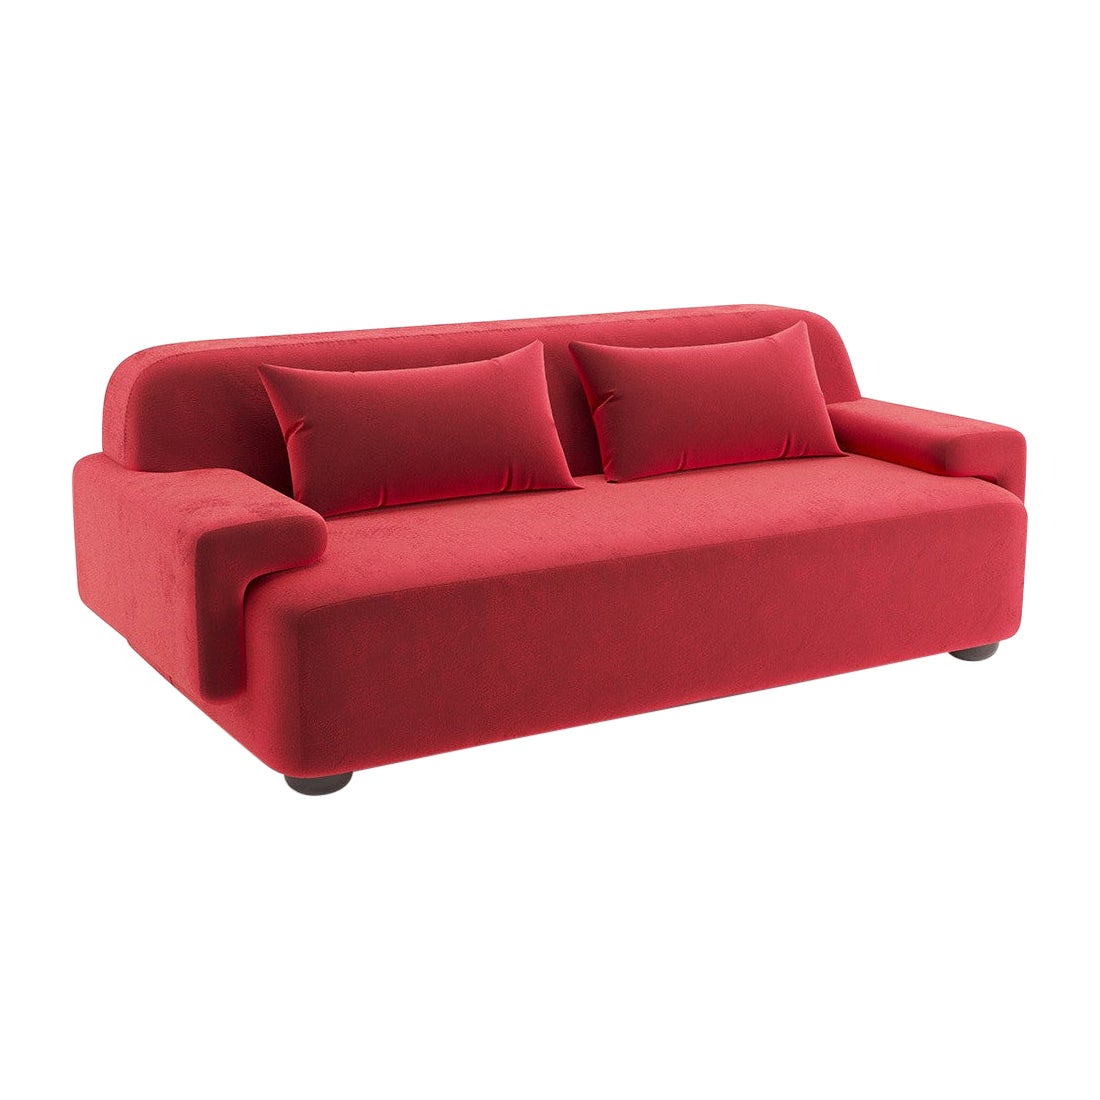 Popus Editions Lena 3 Seater Sofa in Orange-Red Como Velvet Upholstery